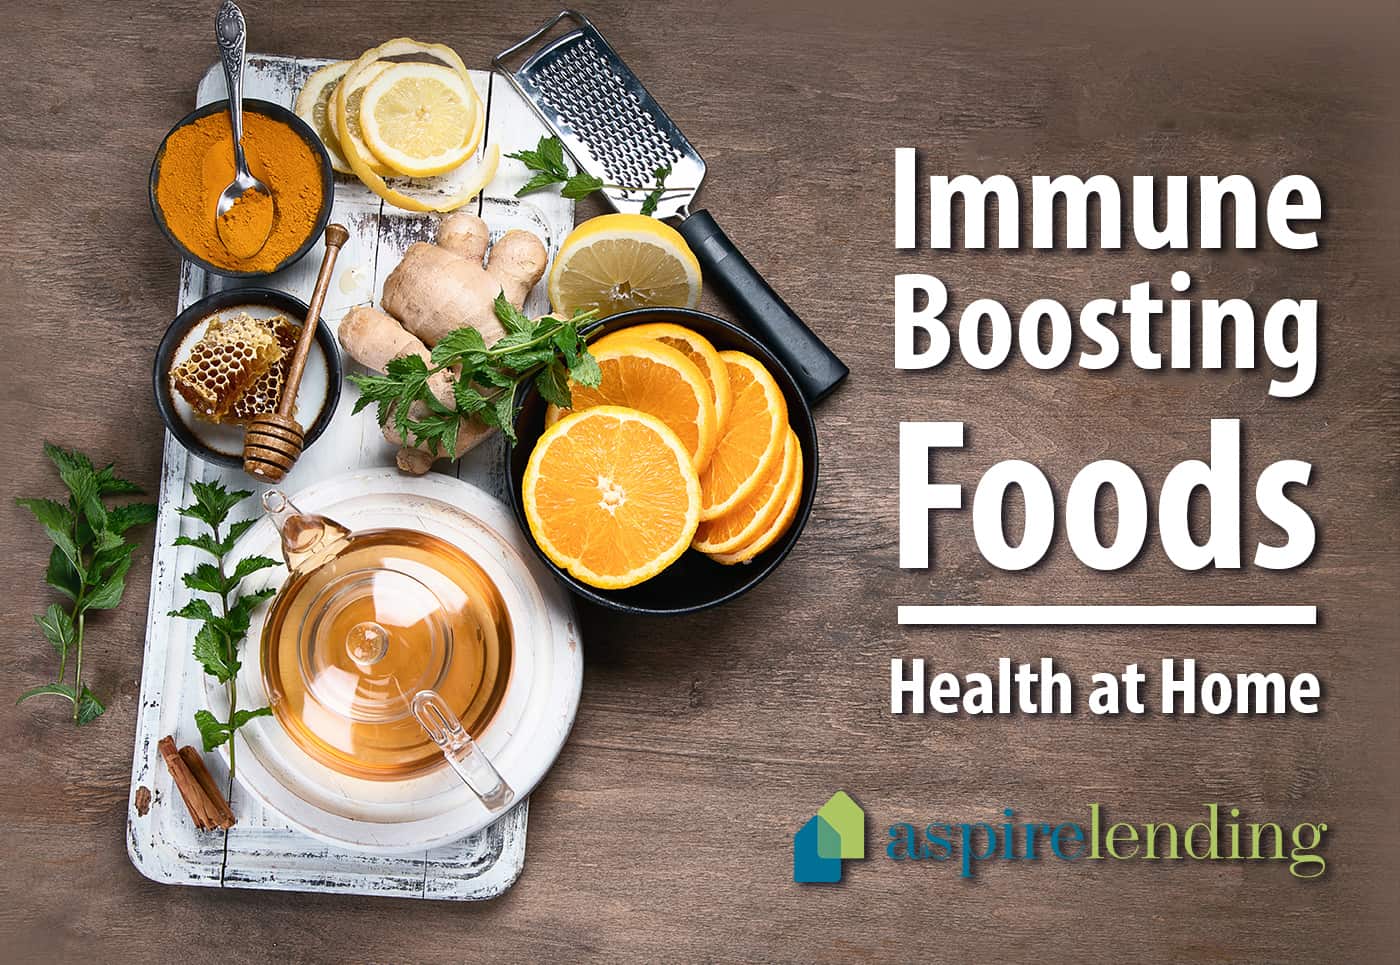 immune boosting food